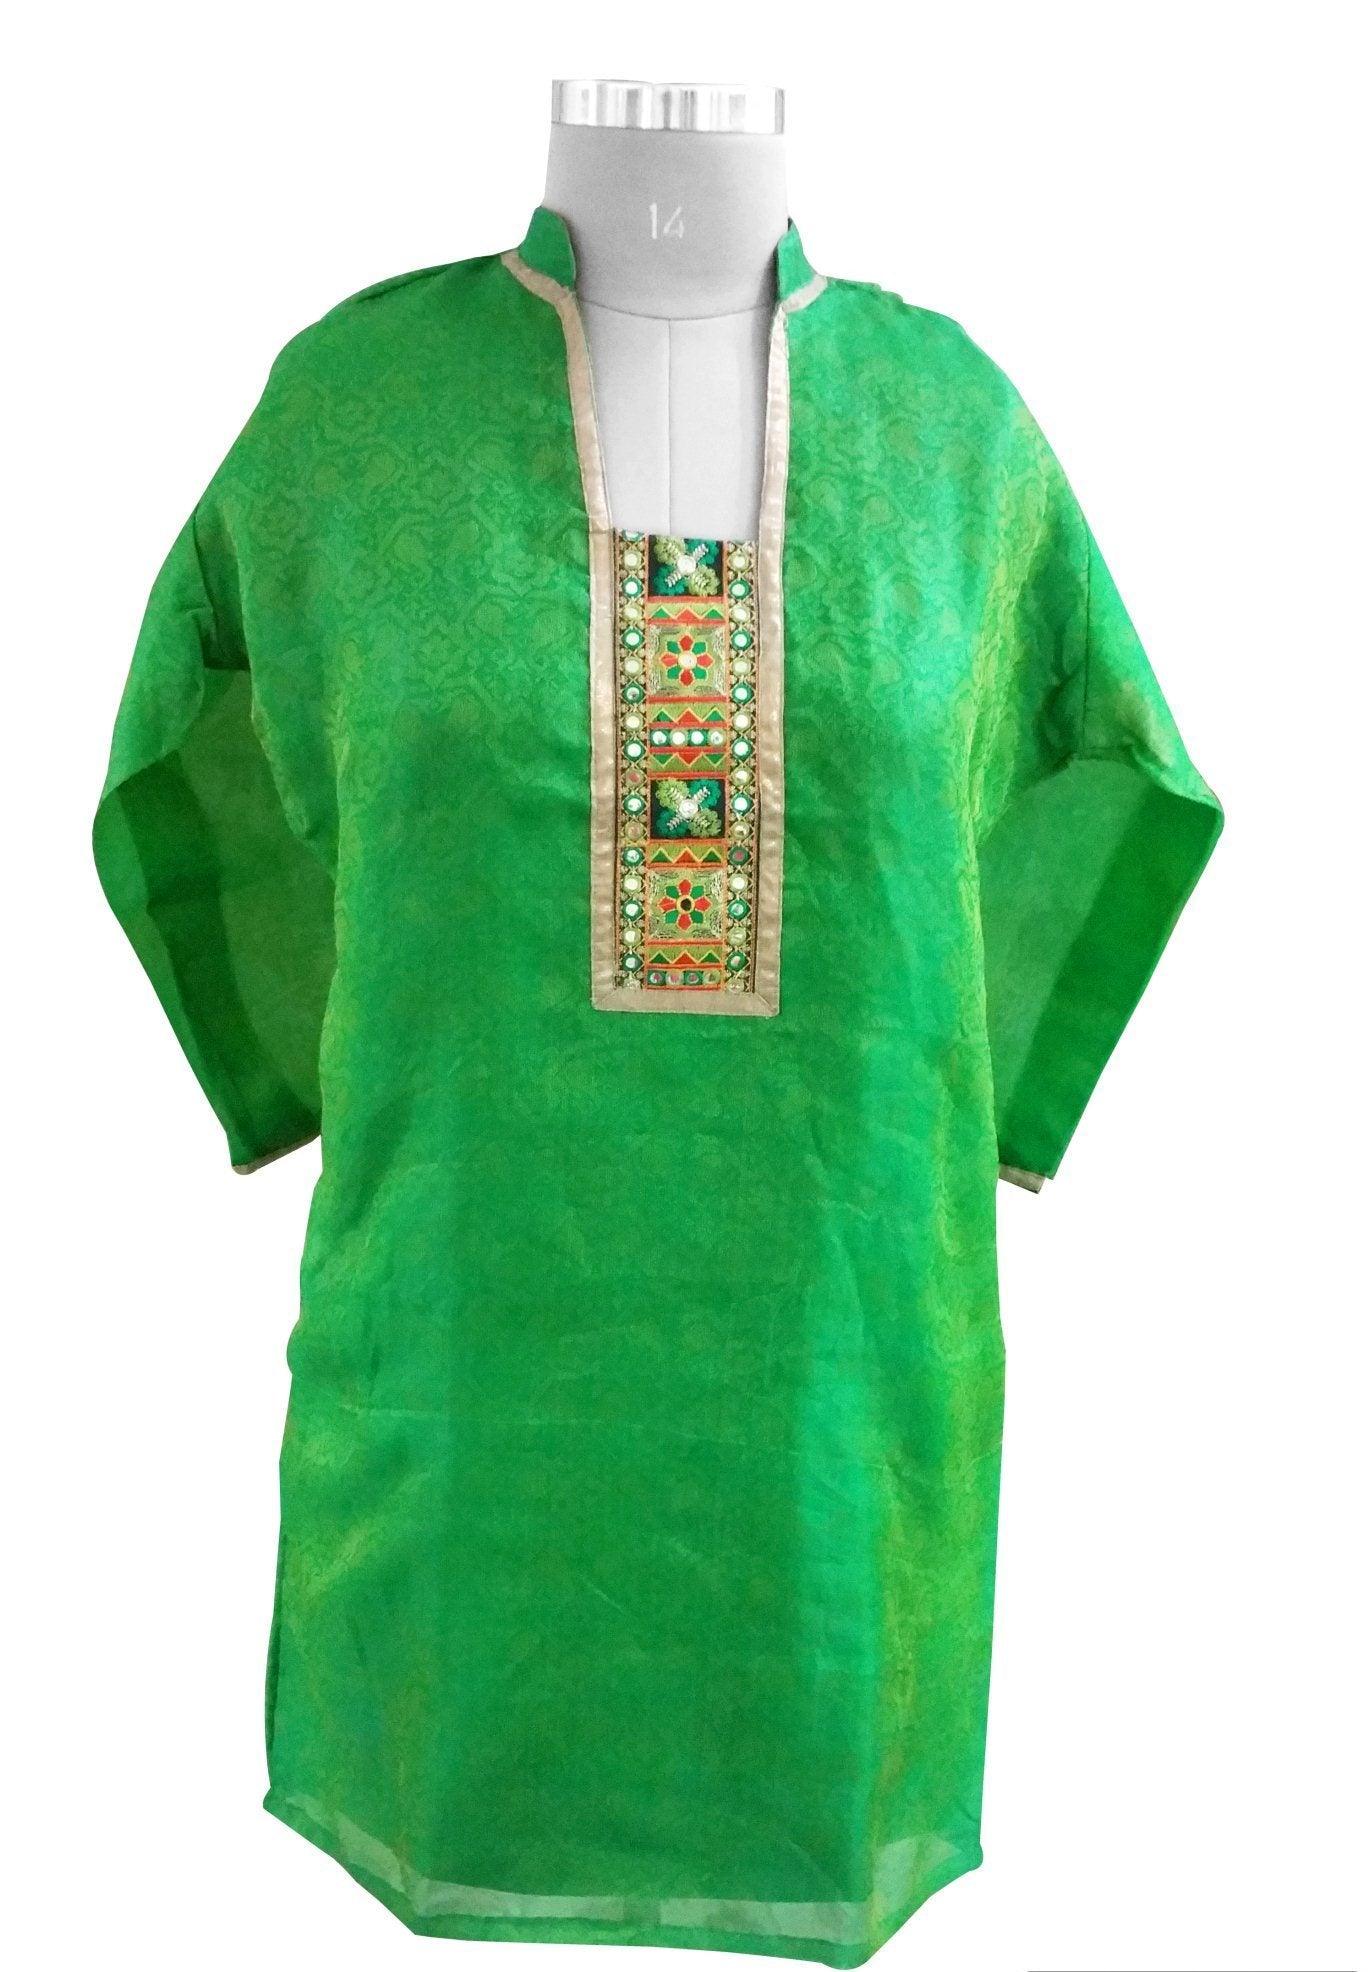 Green Chanderi with lining Stitched Kurta Dress Size 46 SC612-Anvi Creations-Kurta,Kurti,Top,Tunic